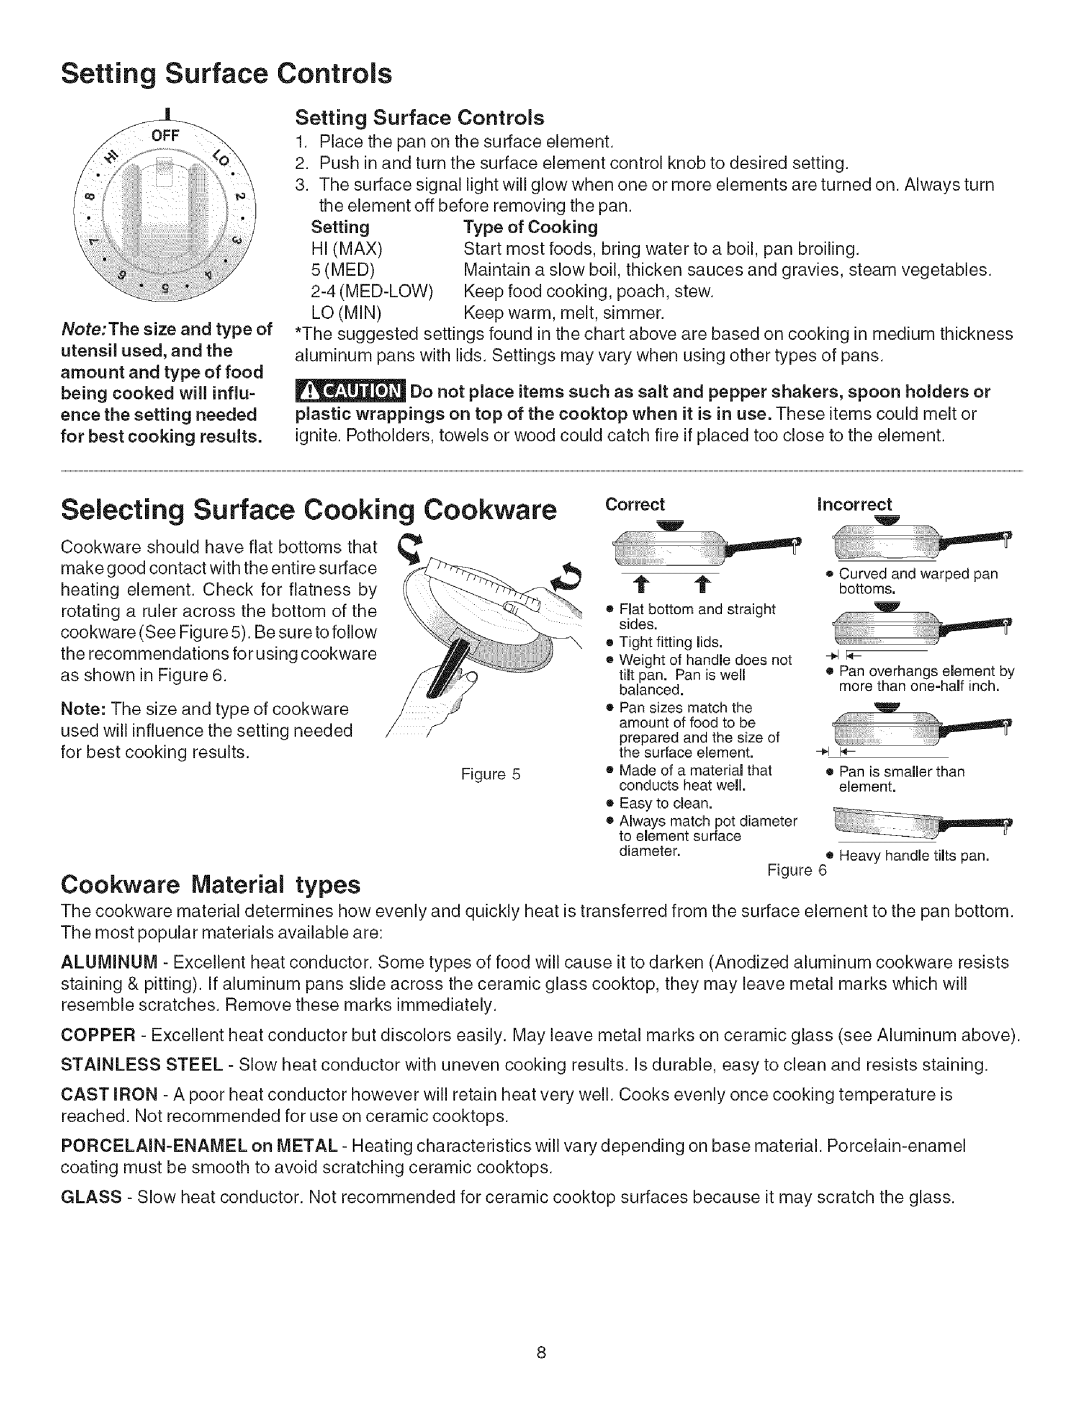 Kenmore 790.4626 manual Setting Surface Controls, Selecting Surface Cooking Cookware, Cookware Material types 